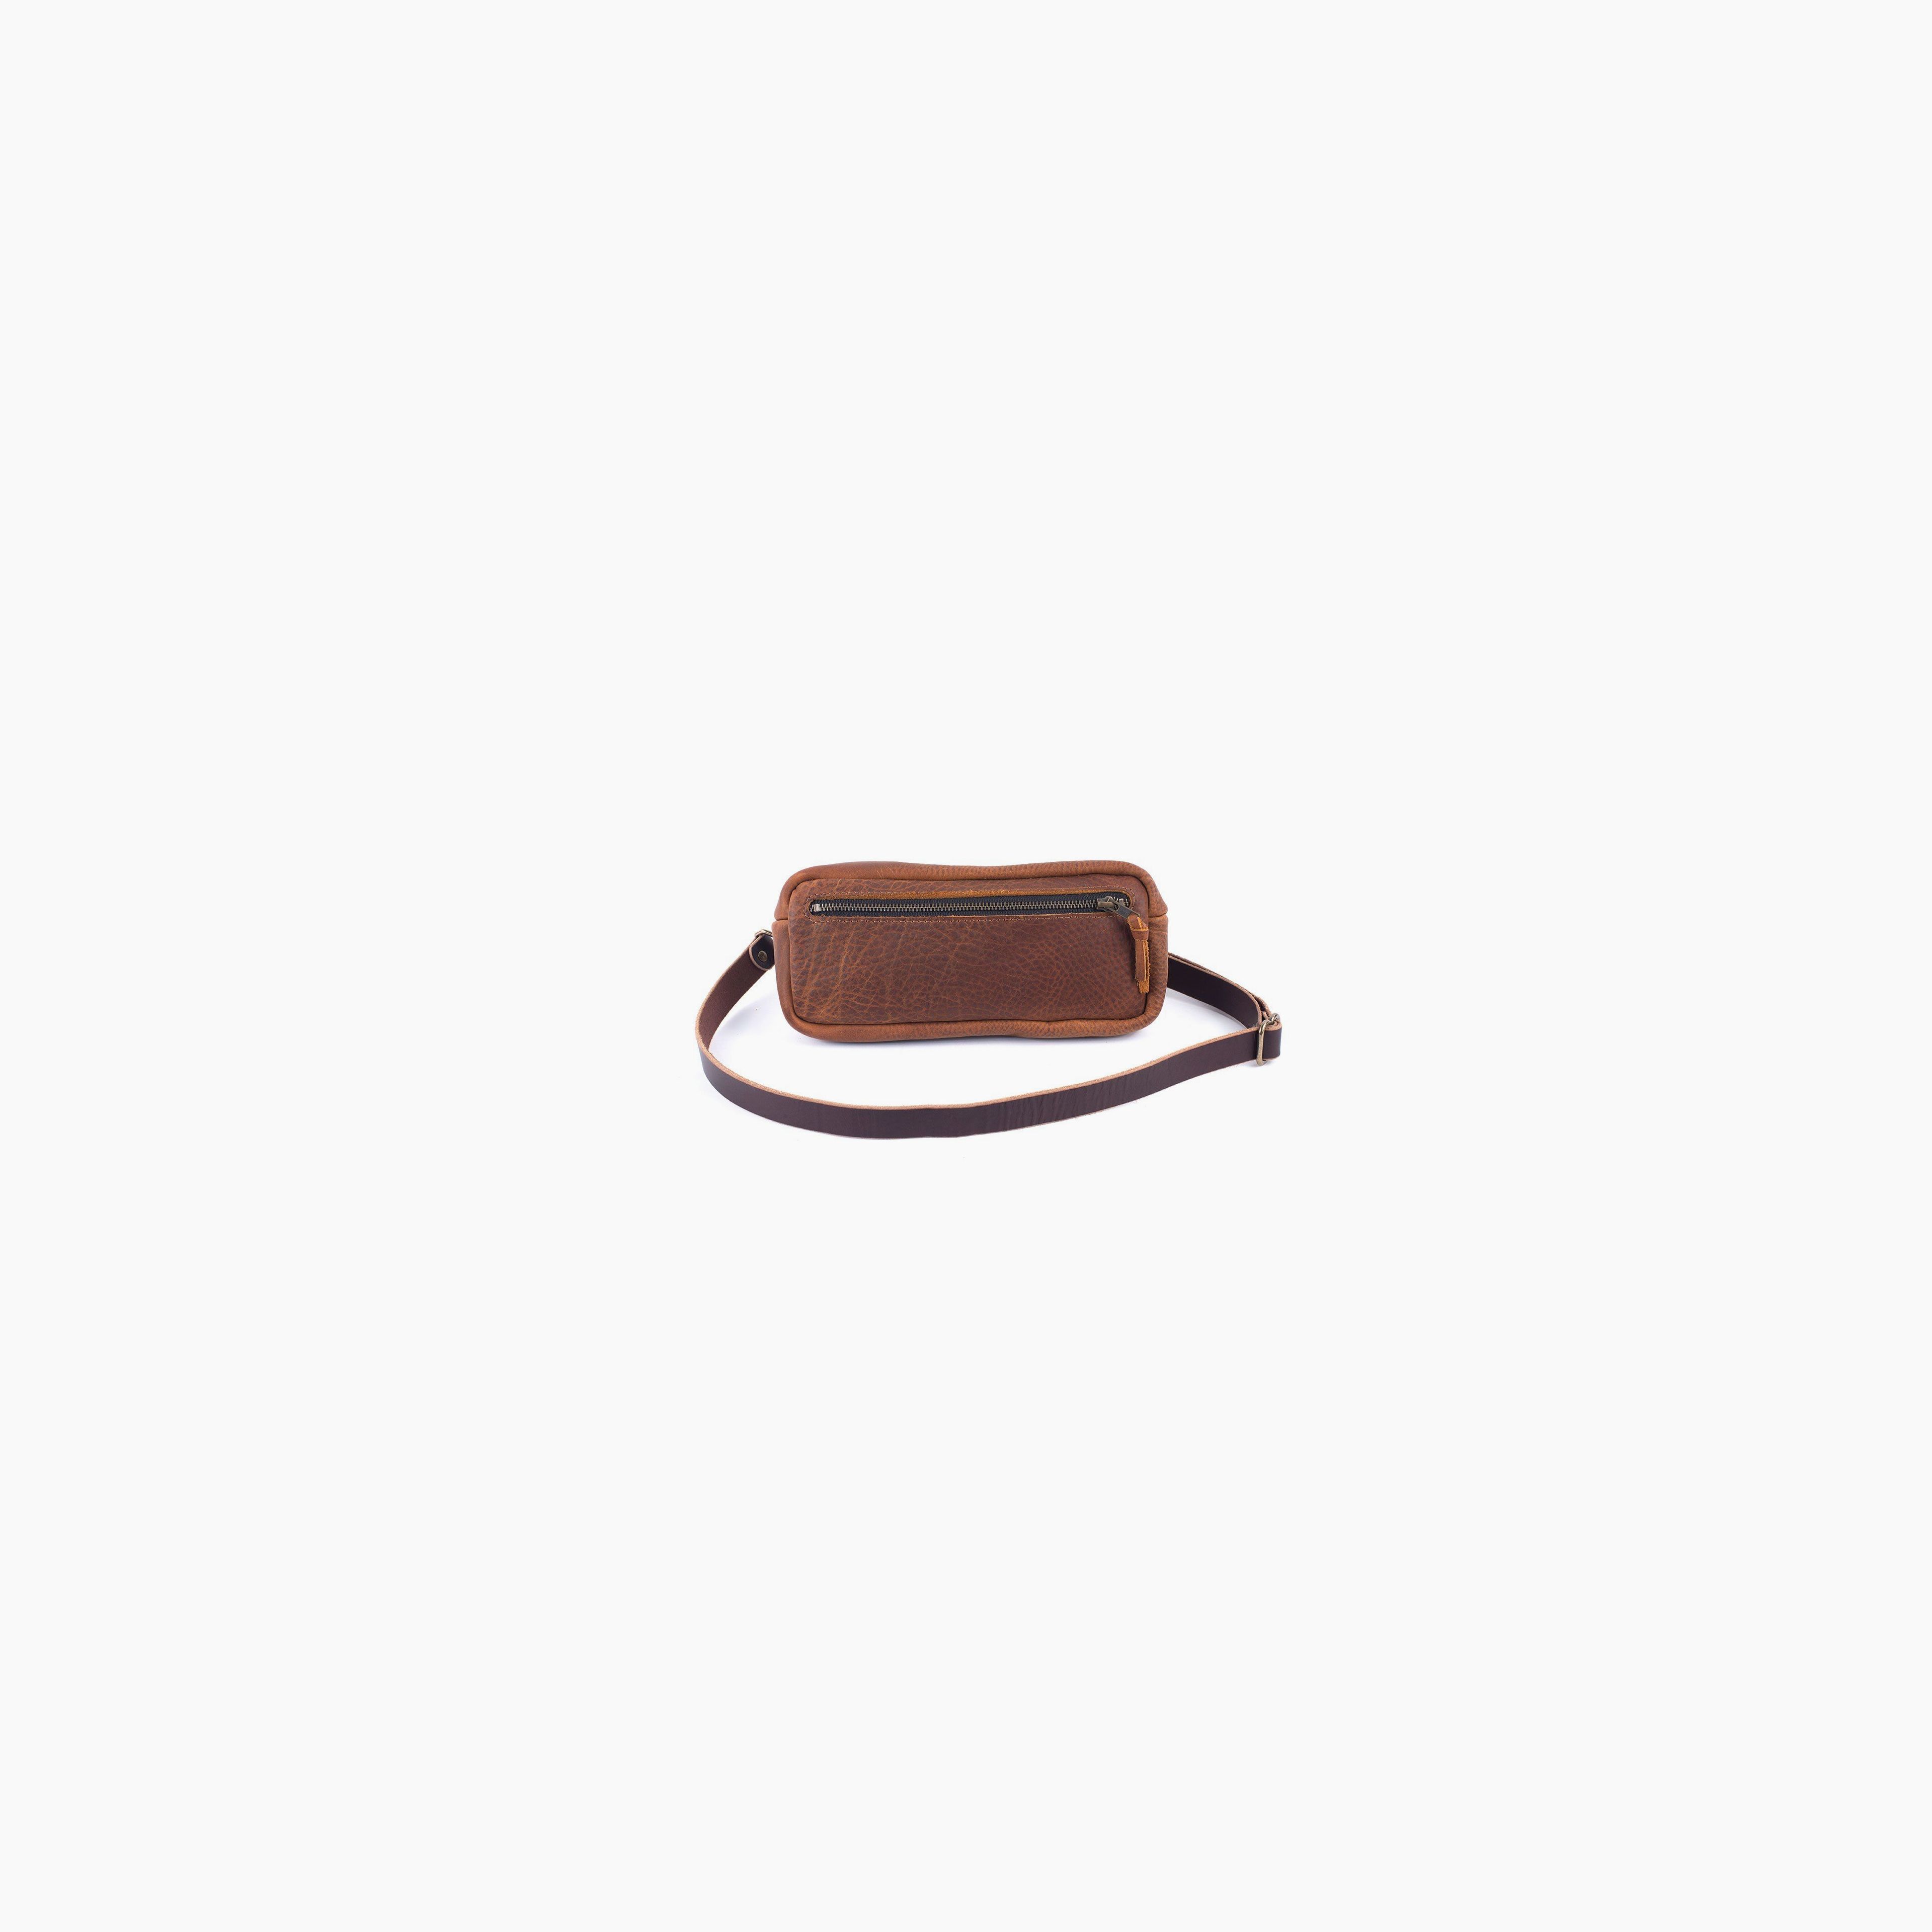 Leather Fanny Pack / Leather Waist Bag - Saddle